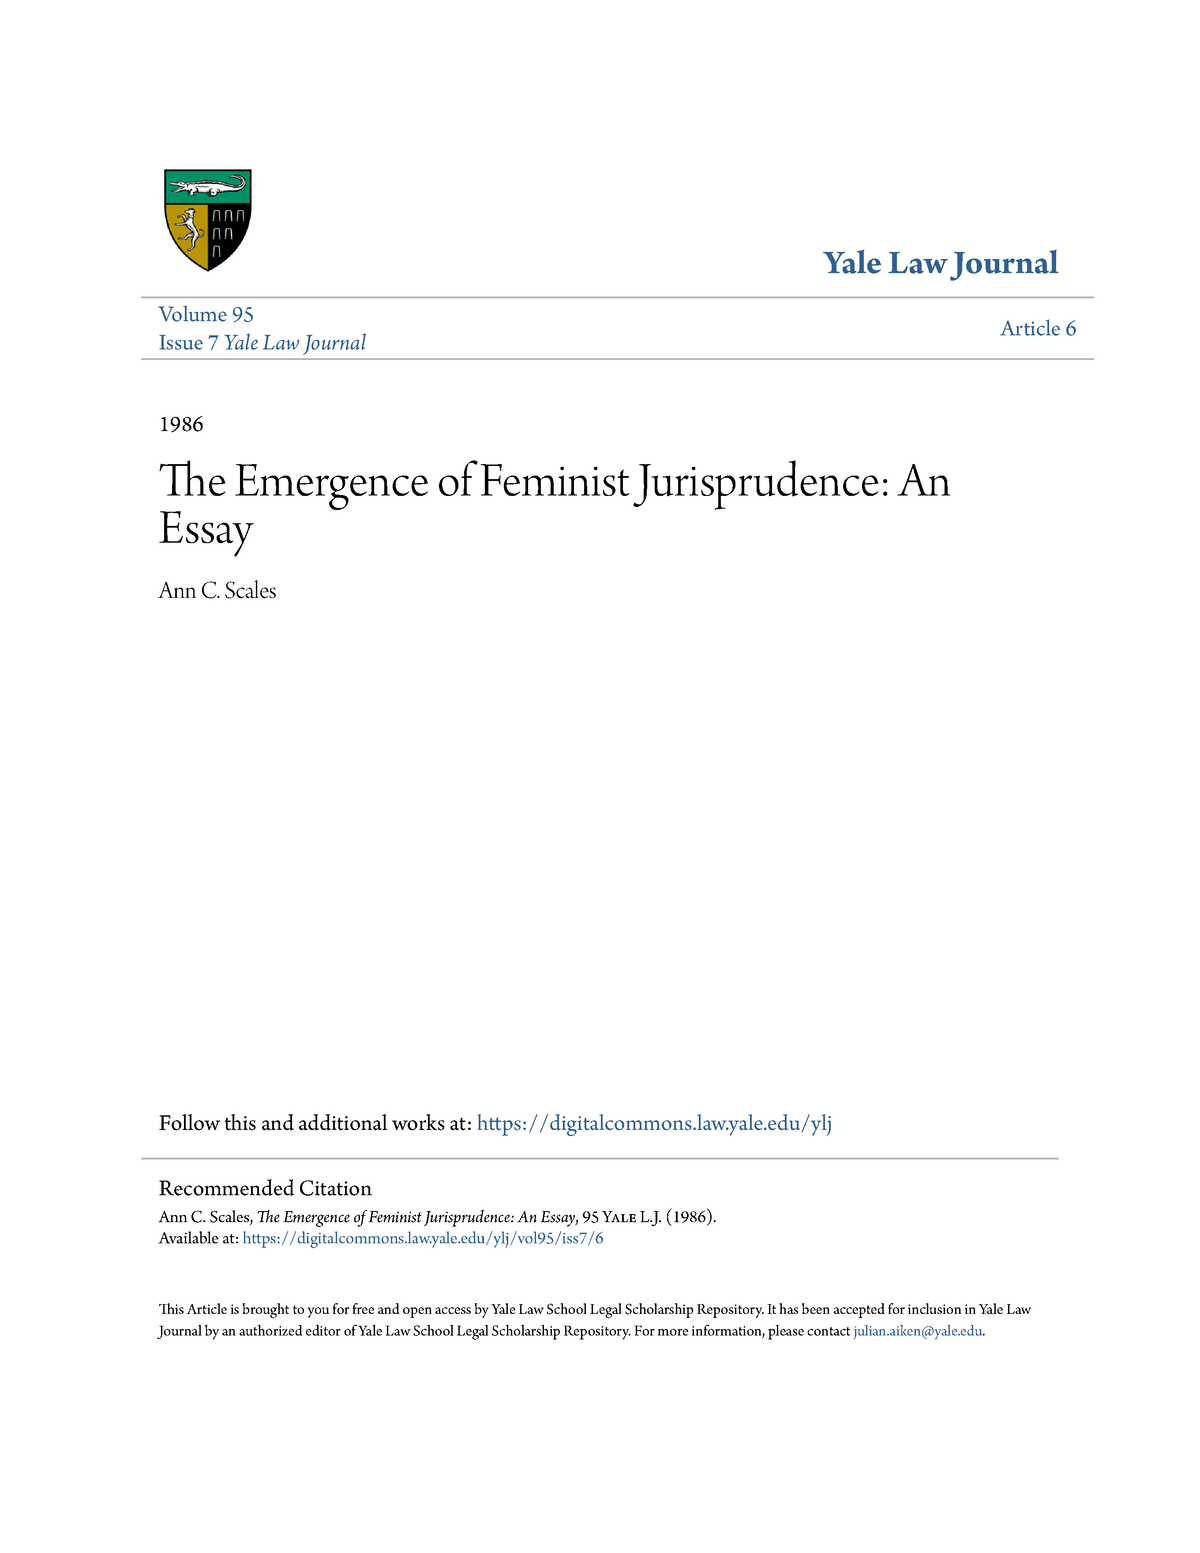 the emergence of feminist jurisprudence an essay